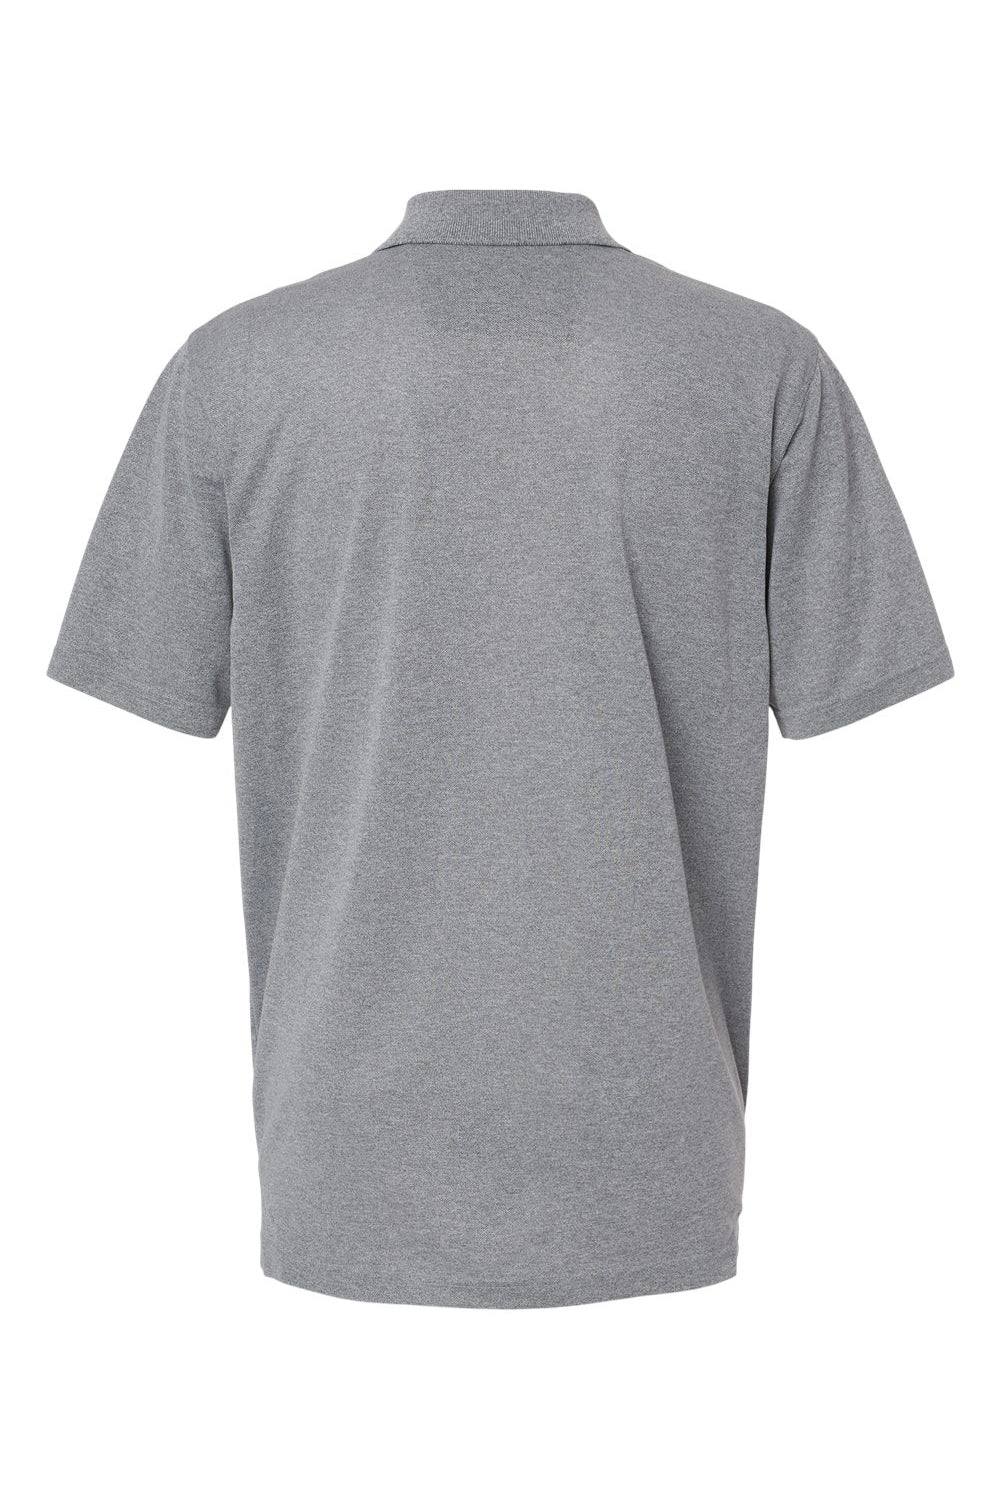 Paragon 100 Mens Saratoga Performance Mini Mesh Short Sleeve Polo Shirt Heather Grey Flat Back